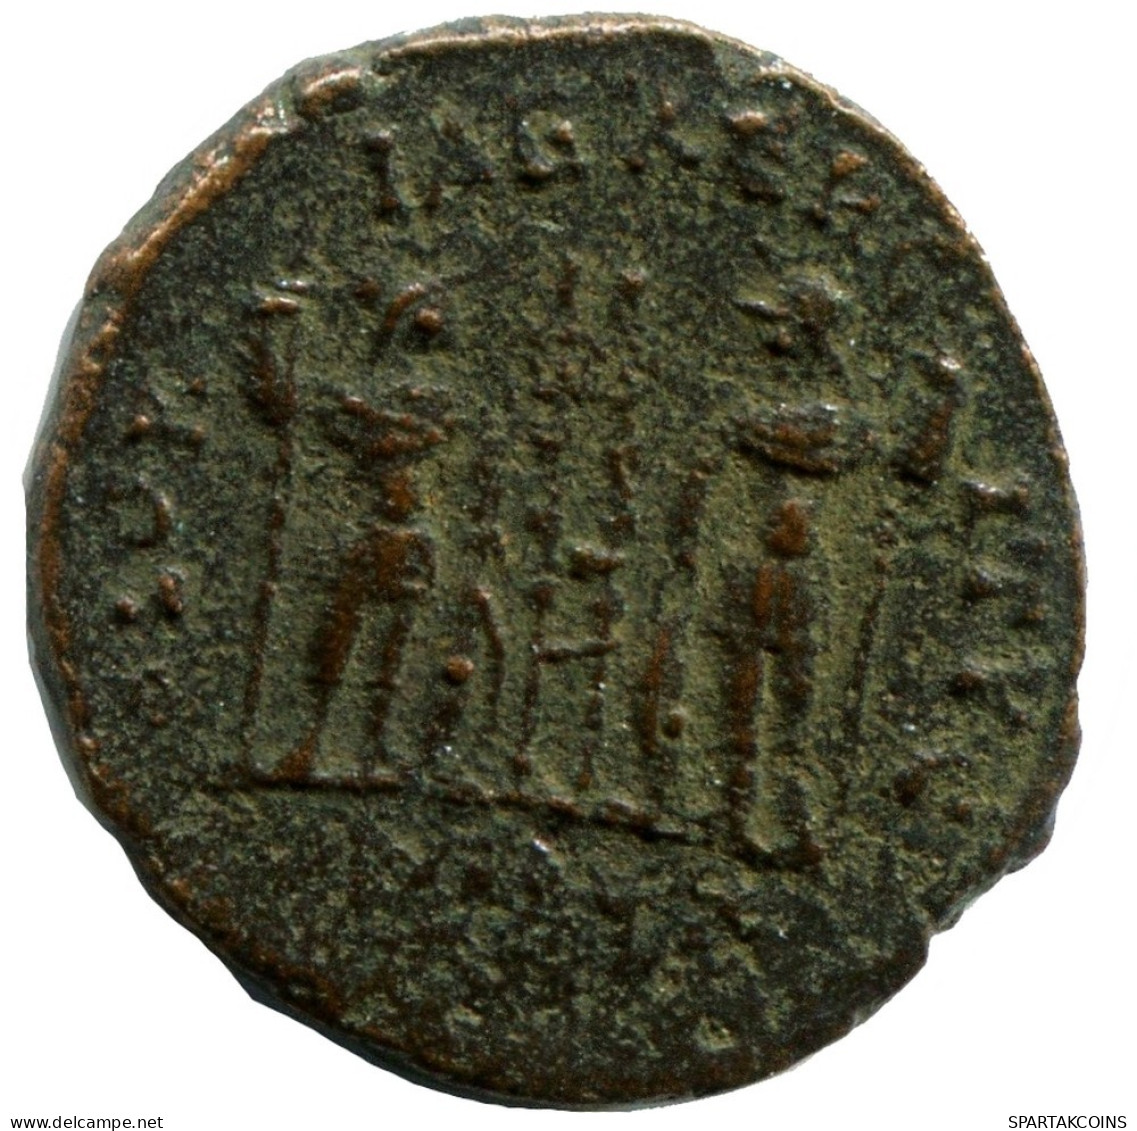 CONSTANS MINTED IN ALEKSANDRIA FOUND IN IHNASYAH HOARD EGYPT #ANC11464.14.F.A - L'Empire Chrétien (307 à 363)